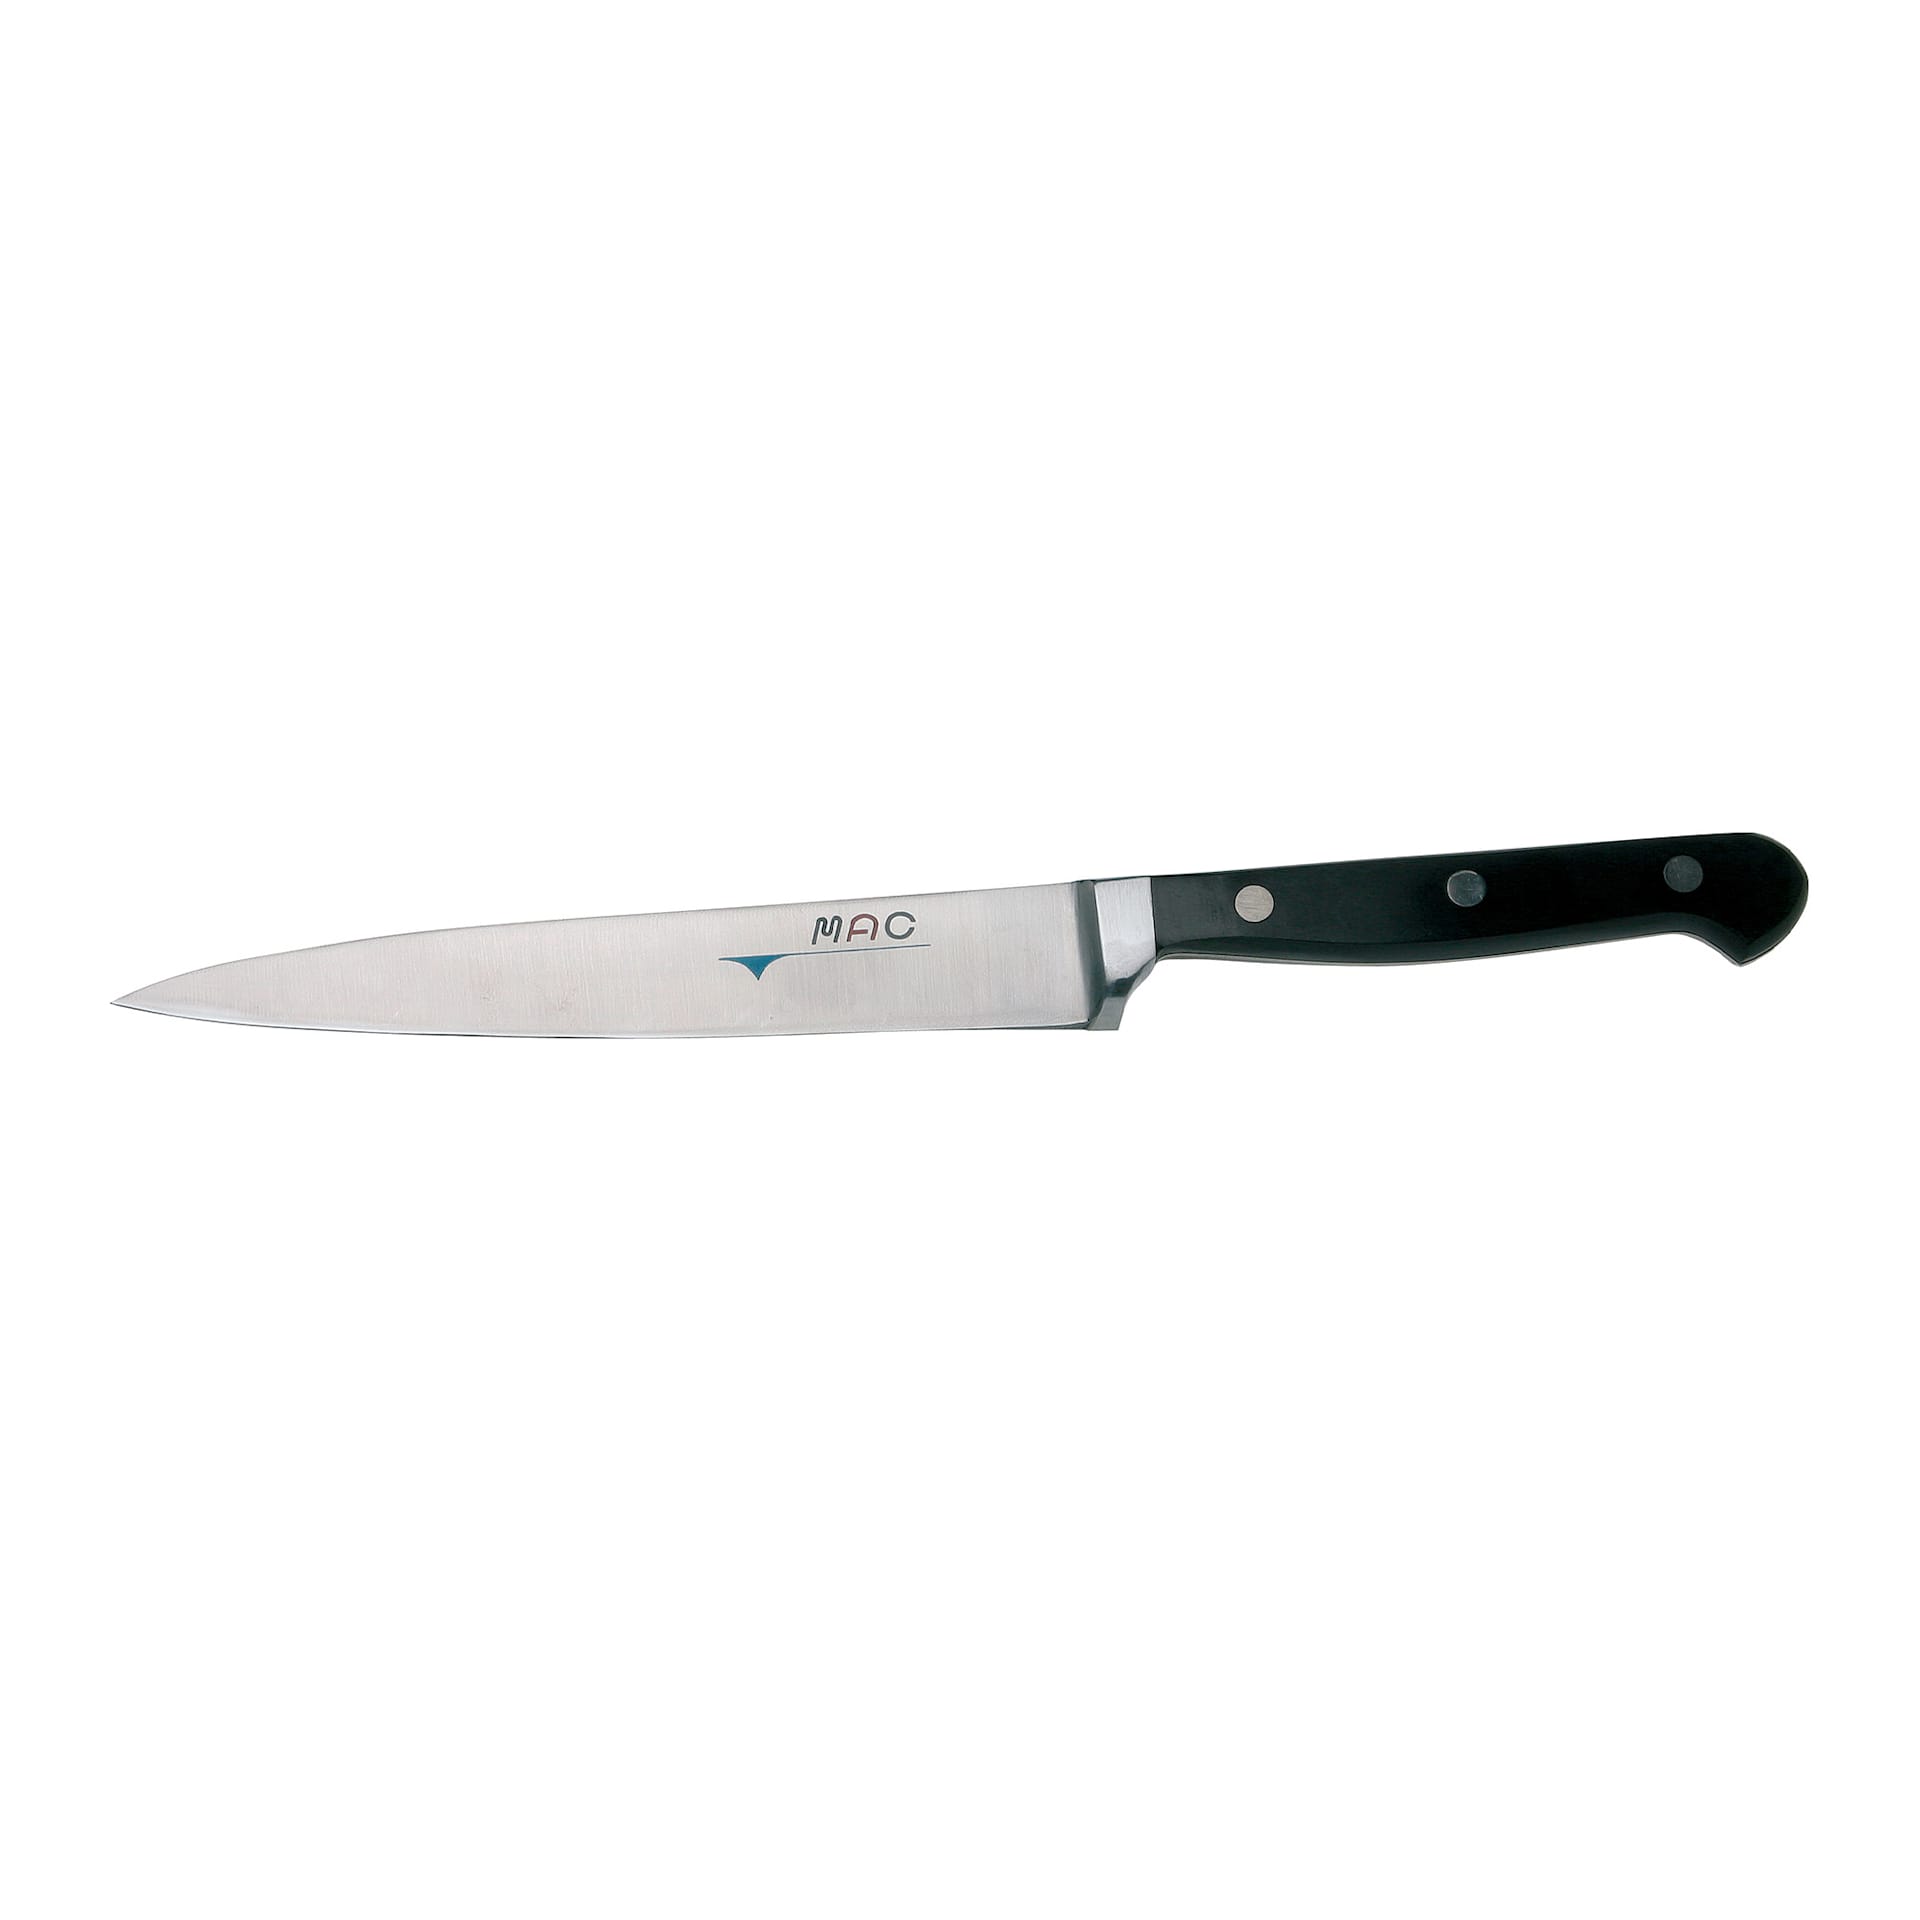 Pro - Flexible Filet Knife, 17.5 cm - MAC - NO GA